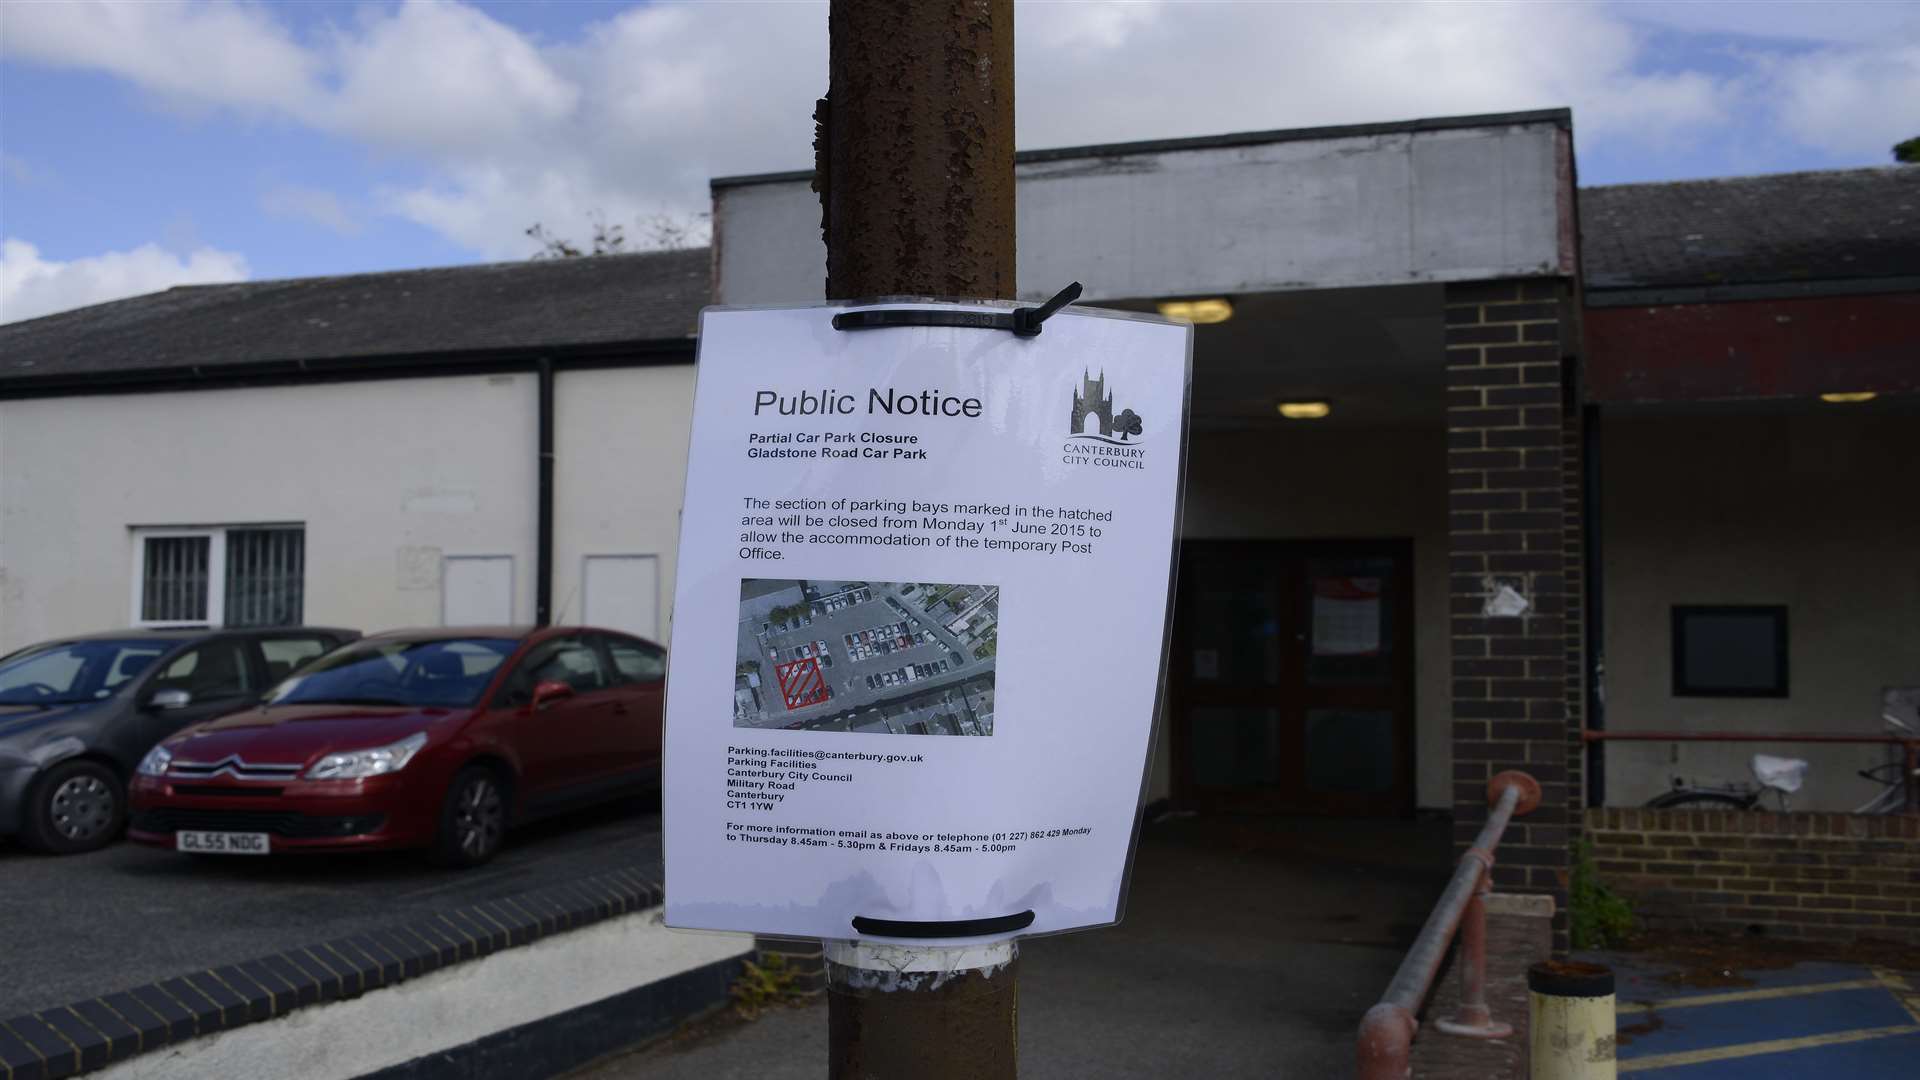 A public notice at the Gladstone Road site